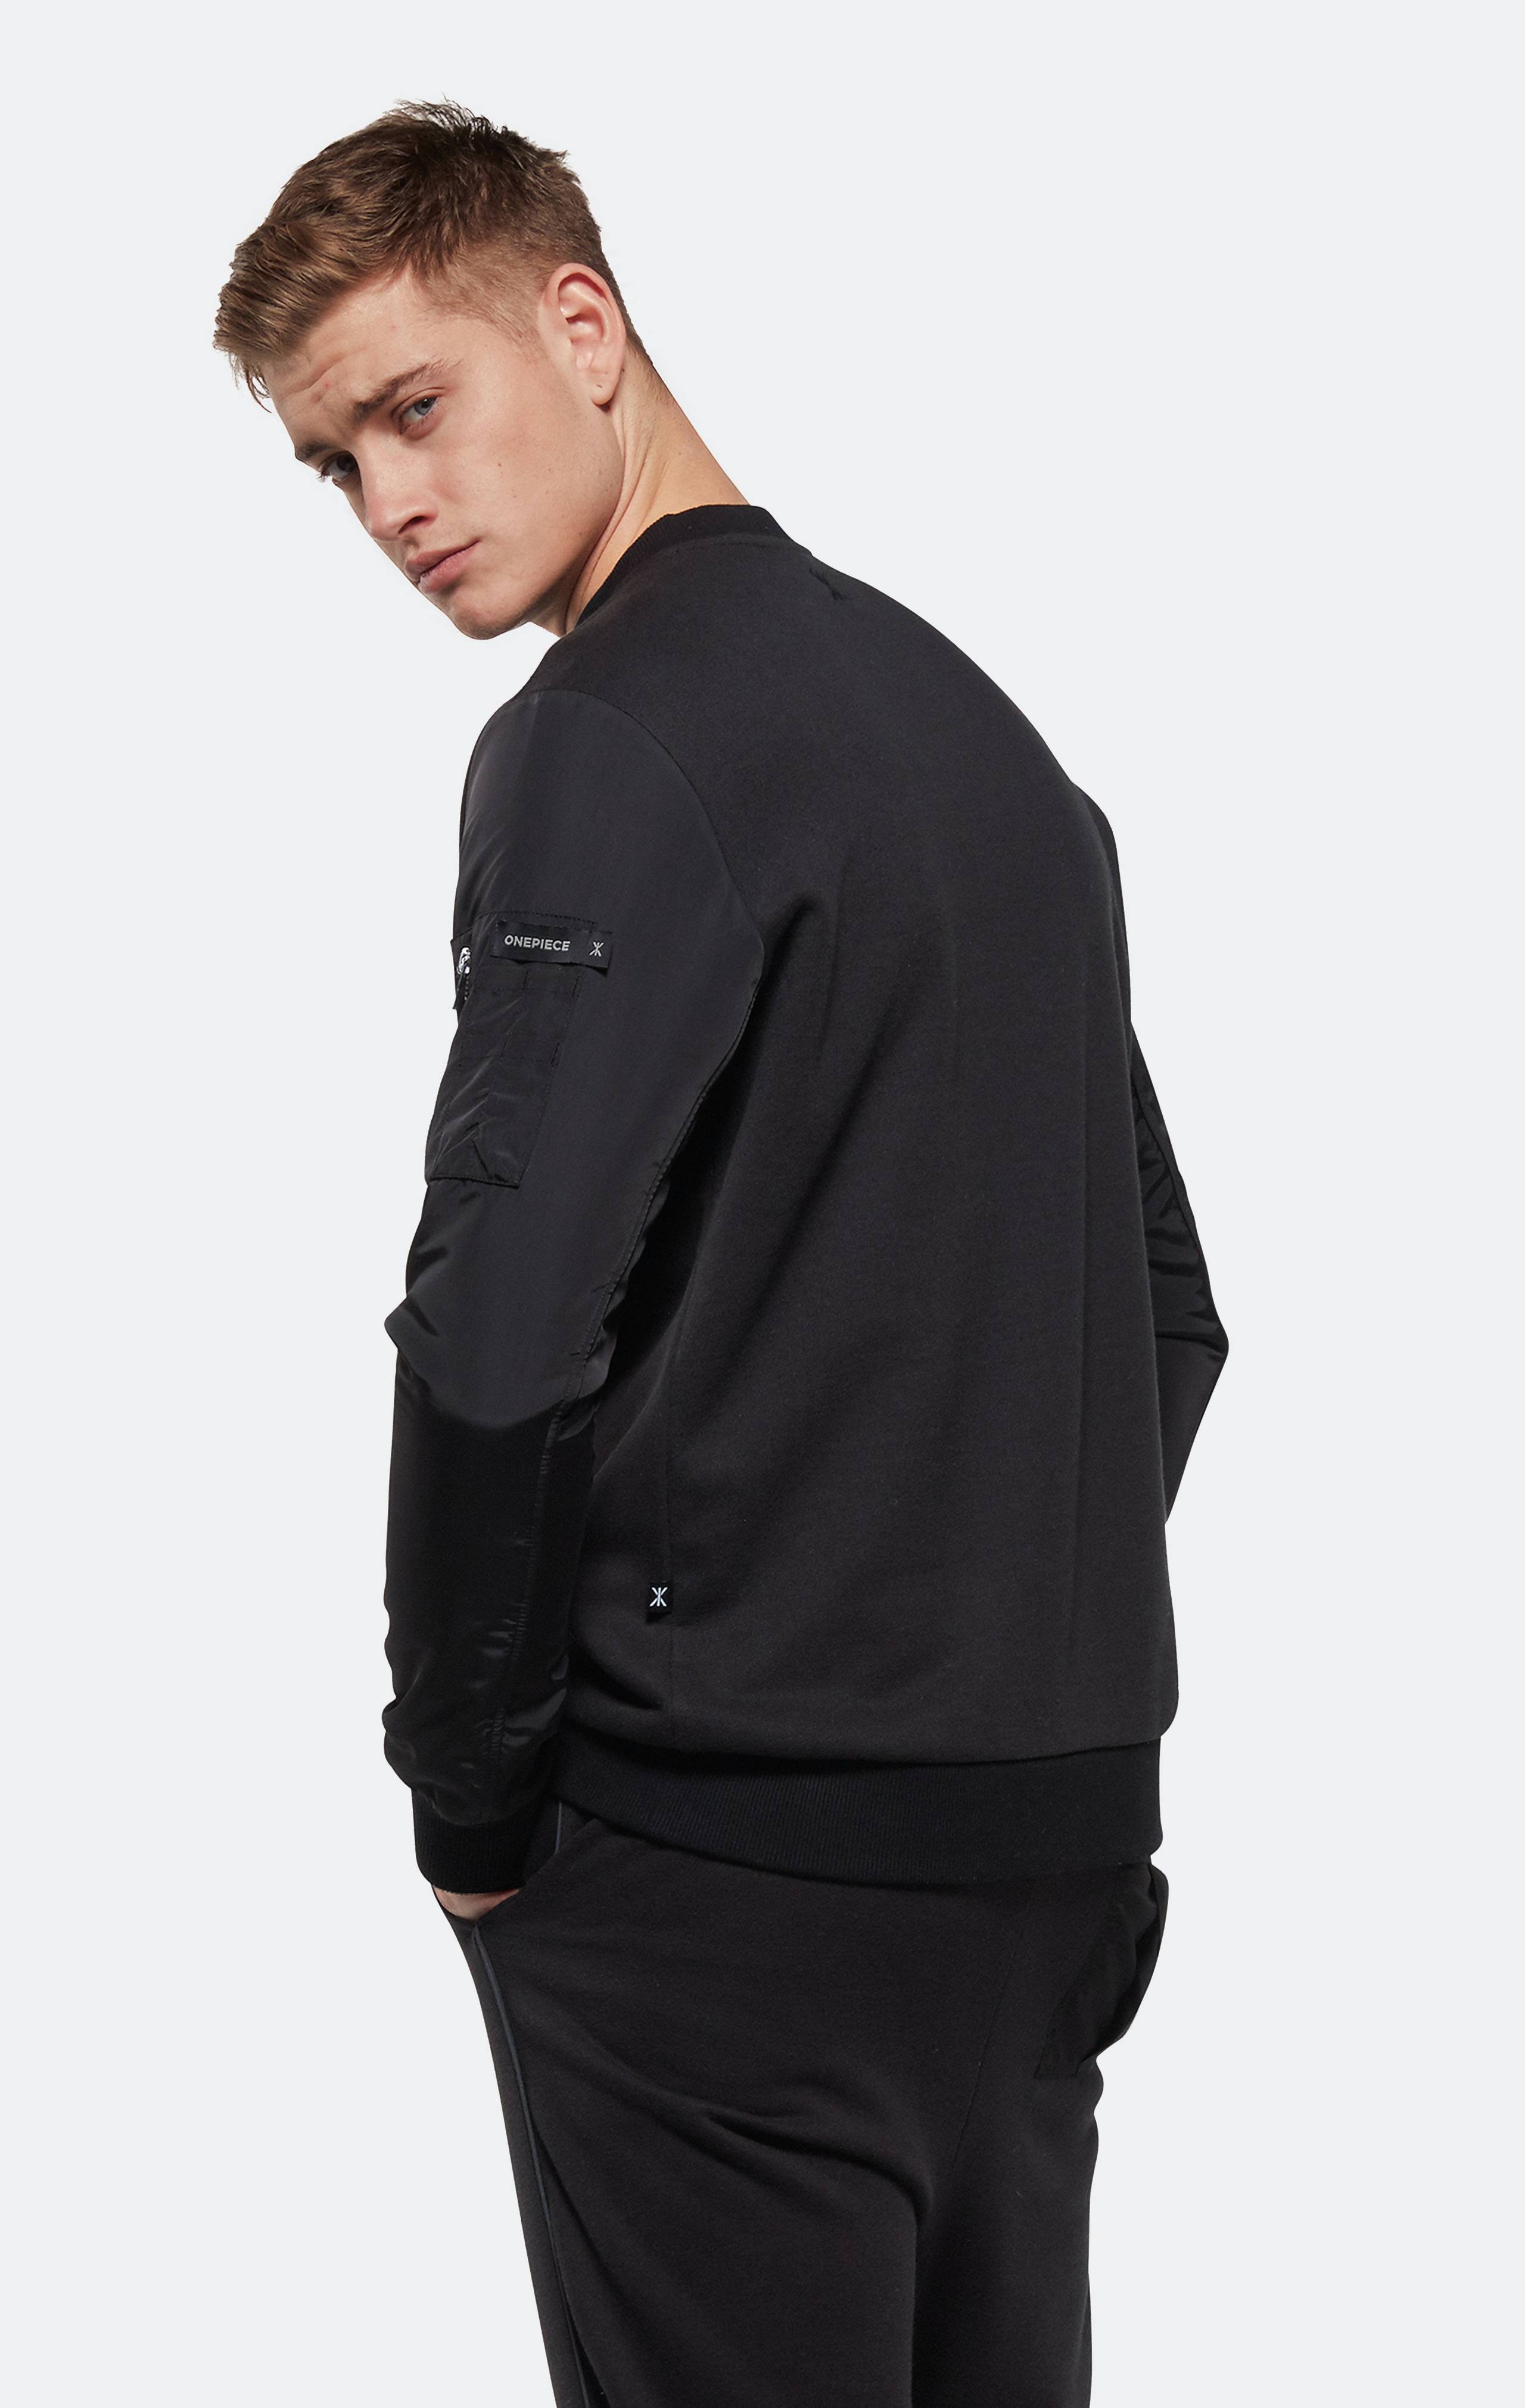 Onepiece Contender Sweater Black - 3